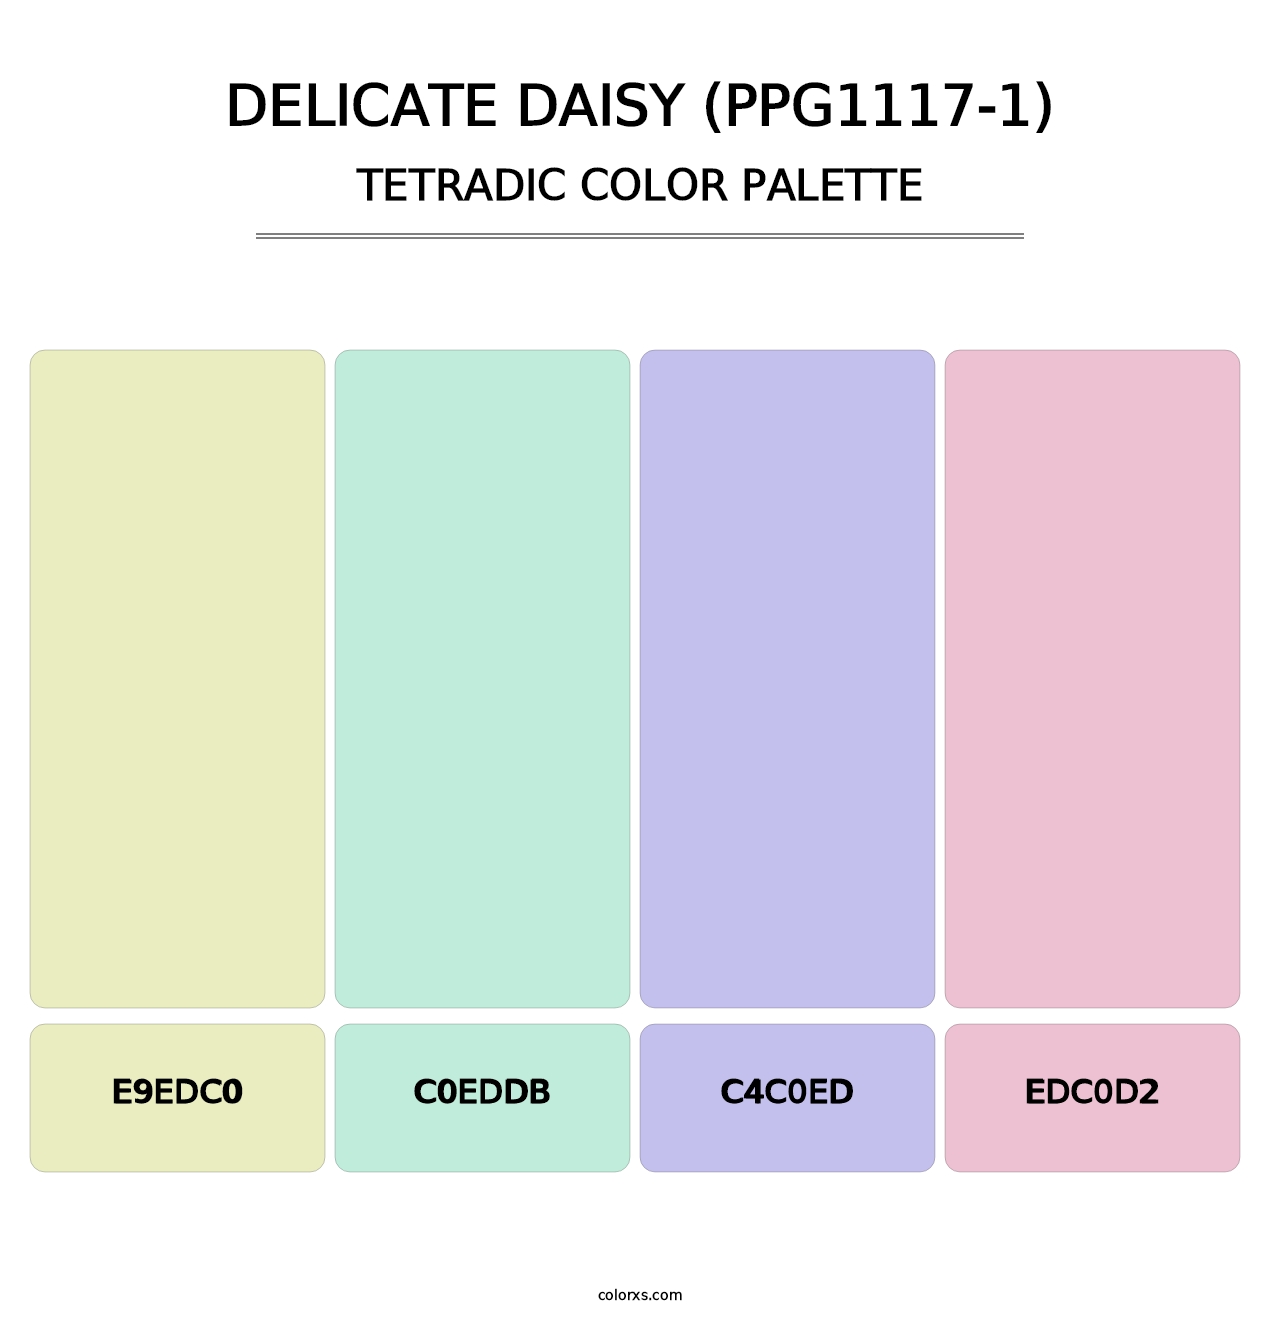 Delicate Daisy (PPG1117-1) - Tetradic Color Palette